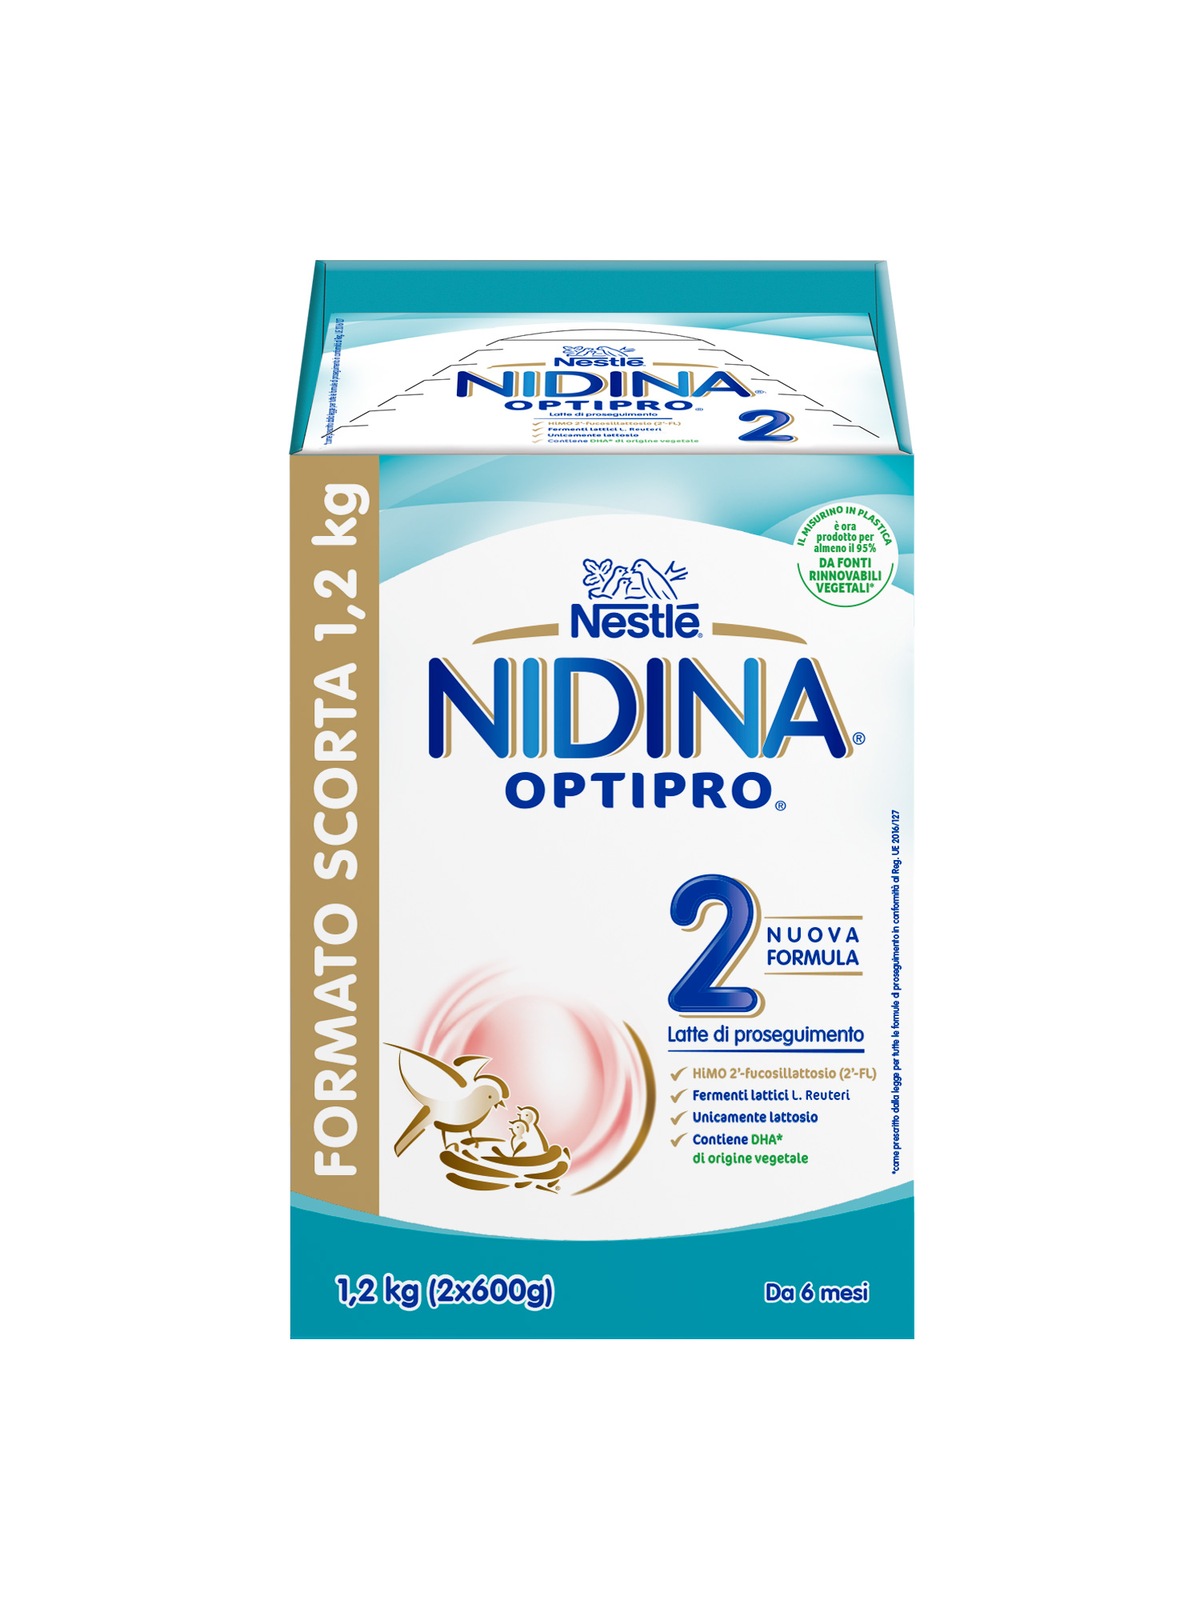 Nestlé nidina optipro 2 da 6 mesi, latte di proseguimento in polvere, 1,2 kg (2x600g) - Nestlé Nidina